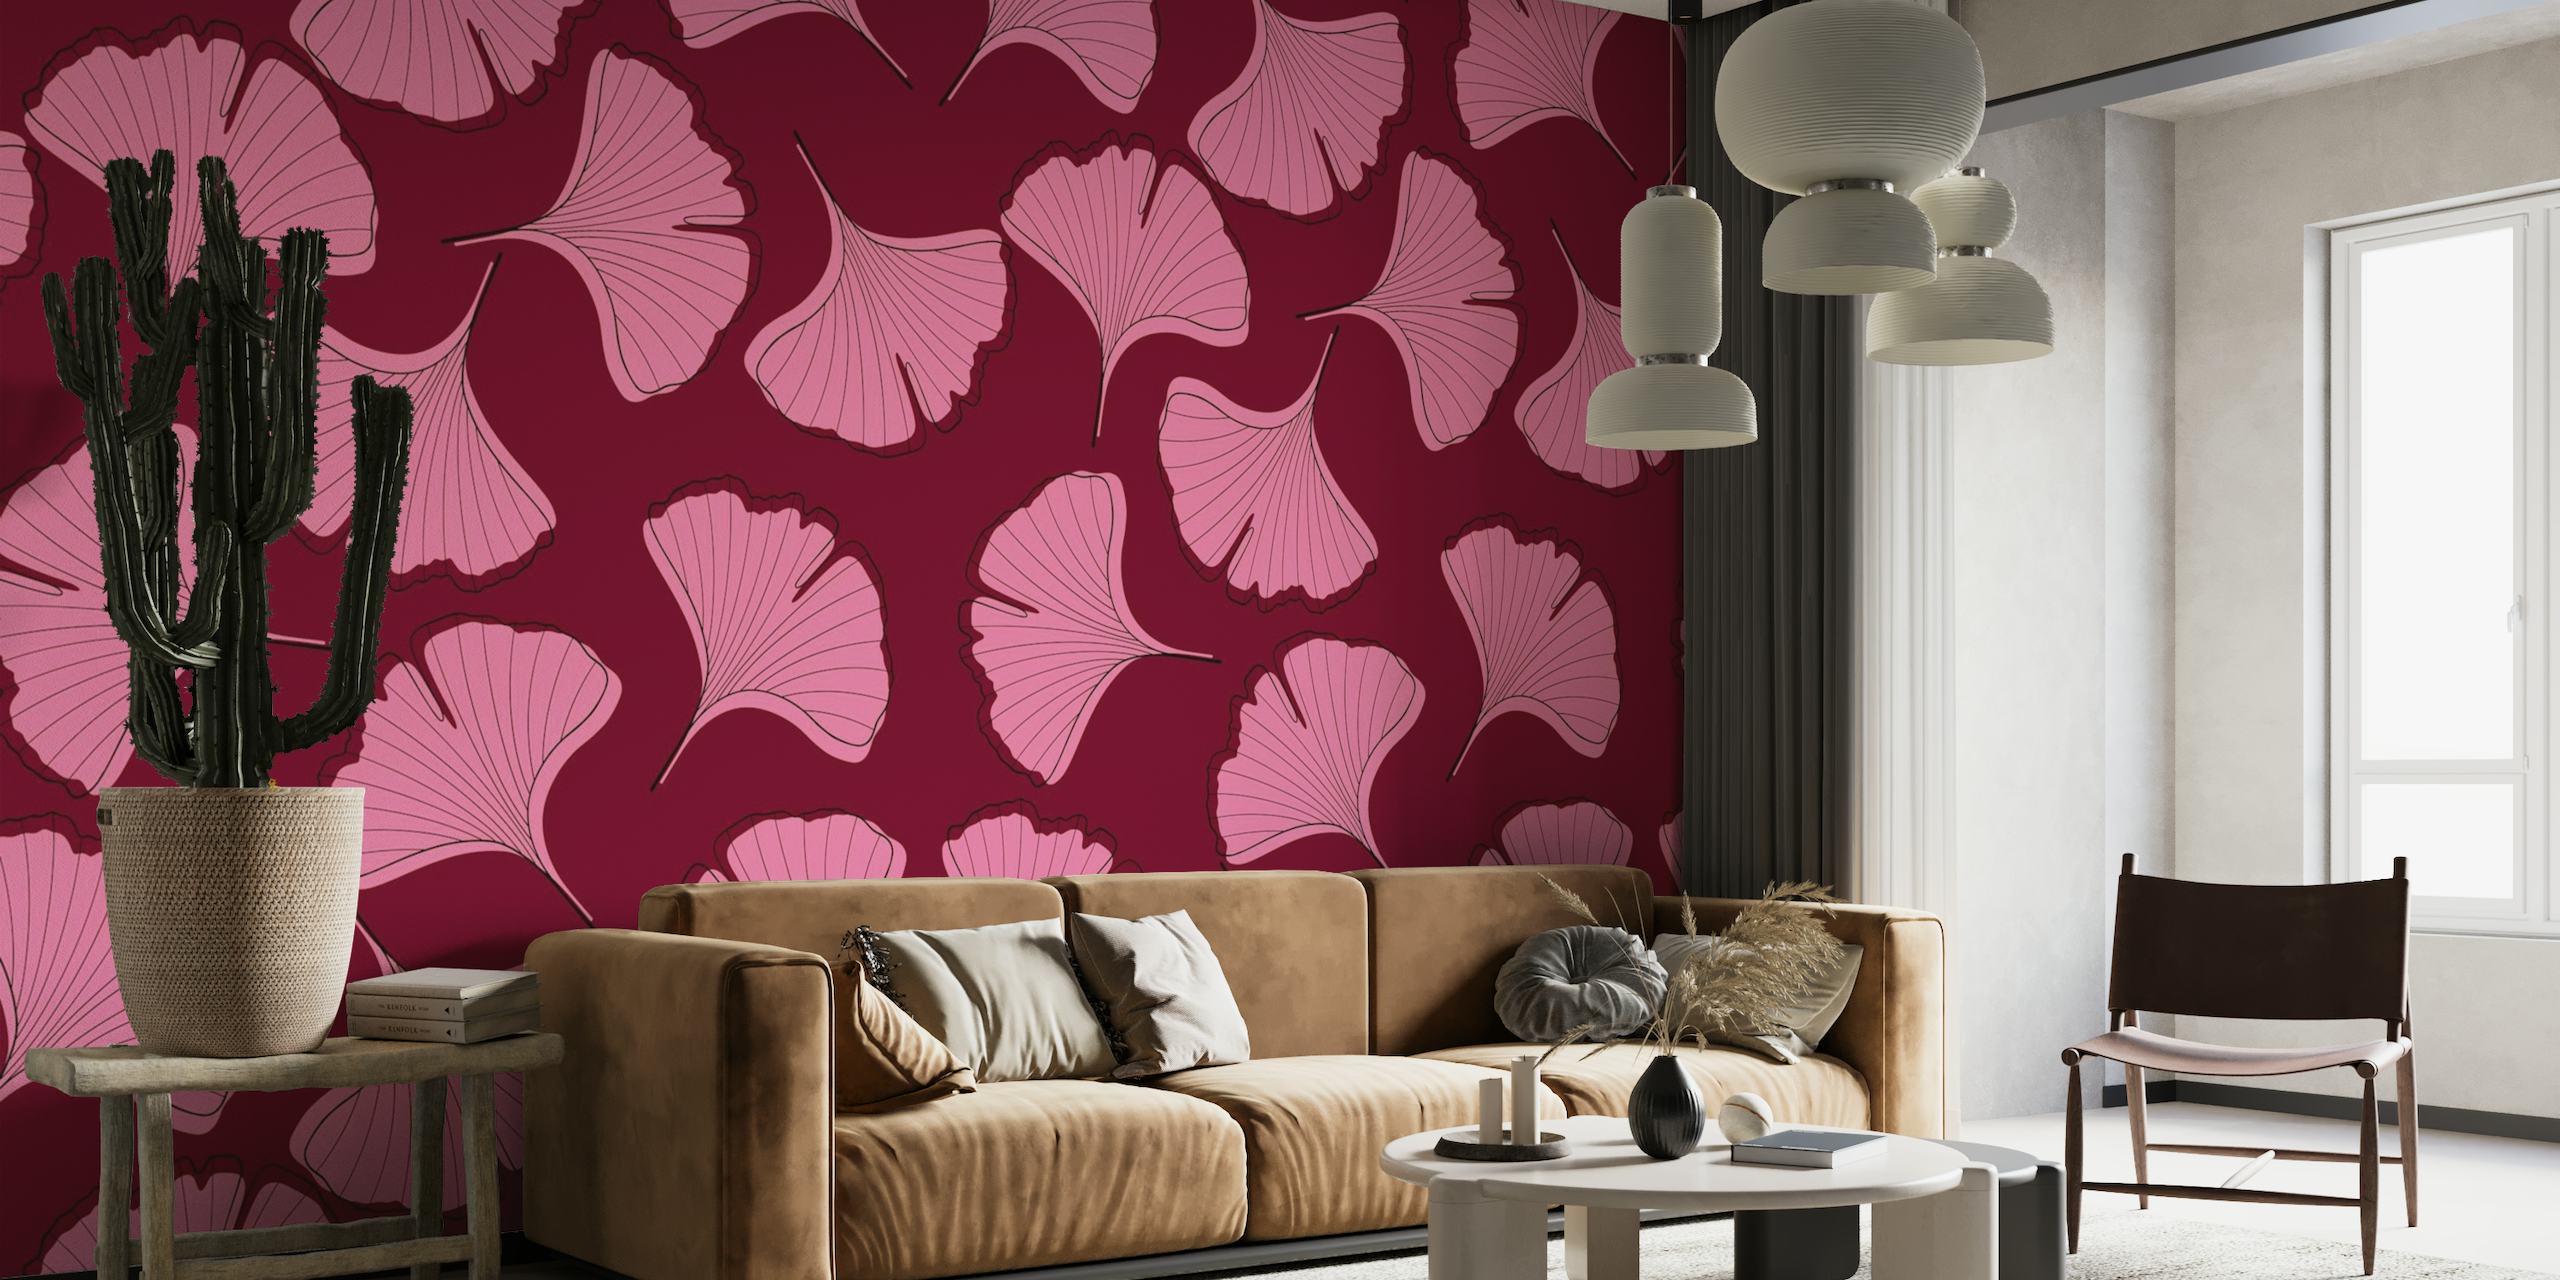 Ginkgo biloba leaf pattern wall mural in pink and maroon